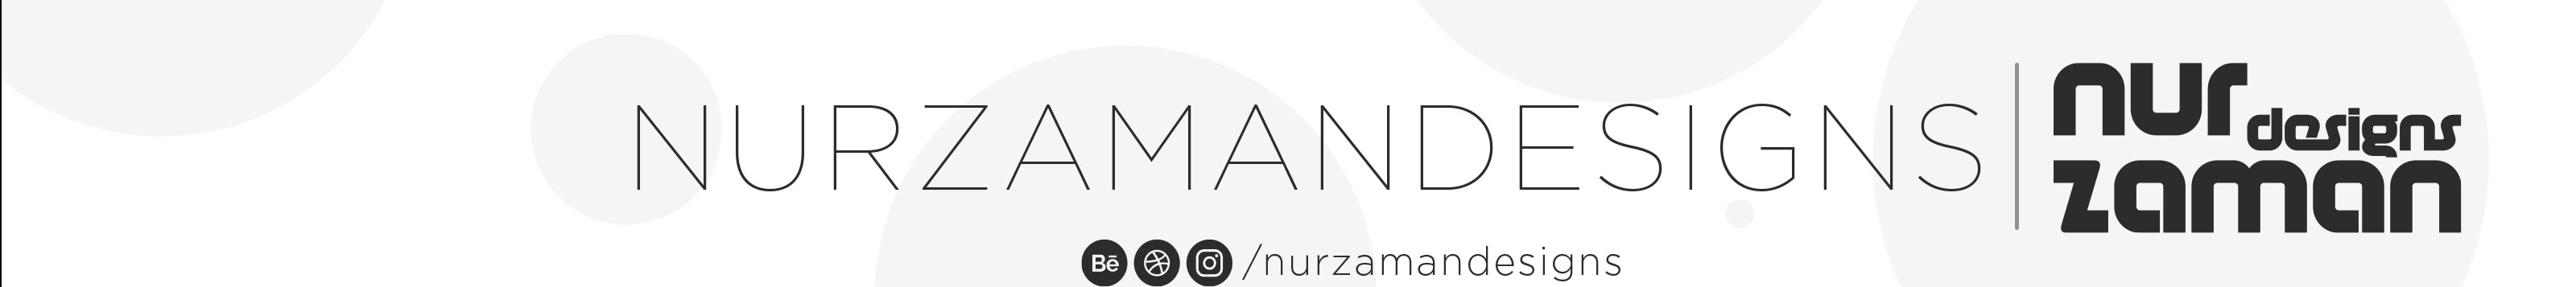 Md Nuruzzaman's profile banner